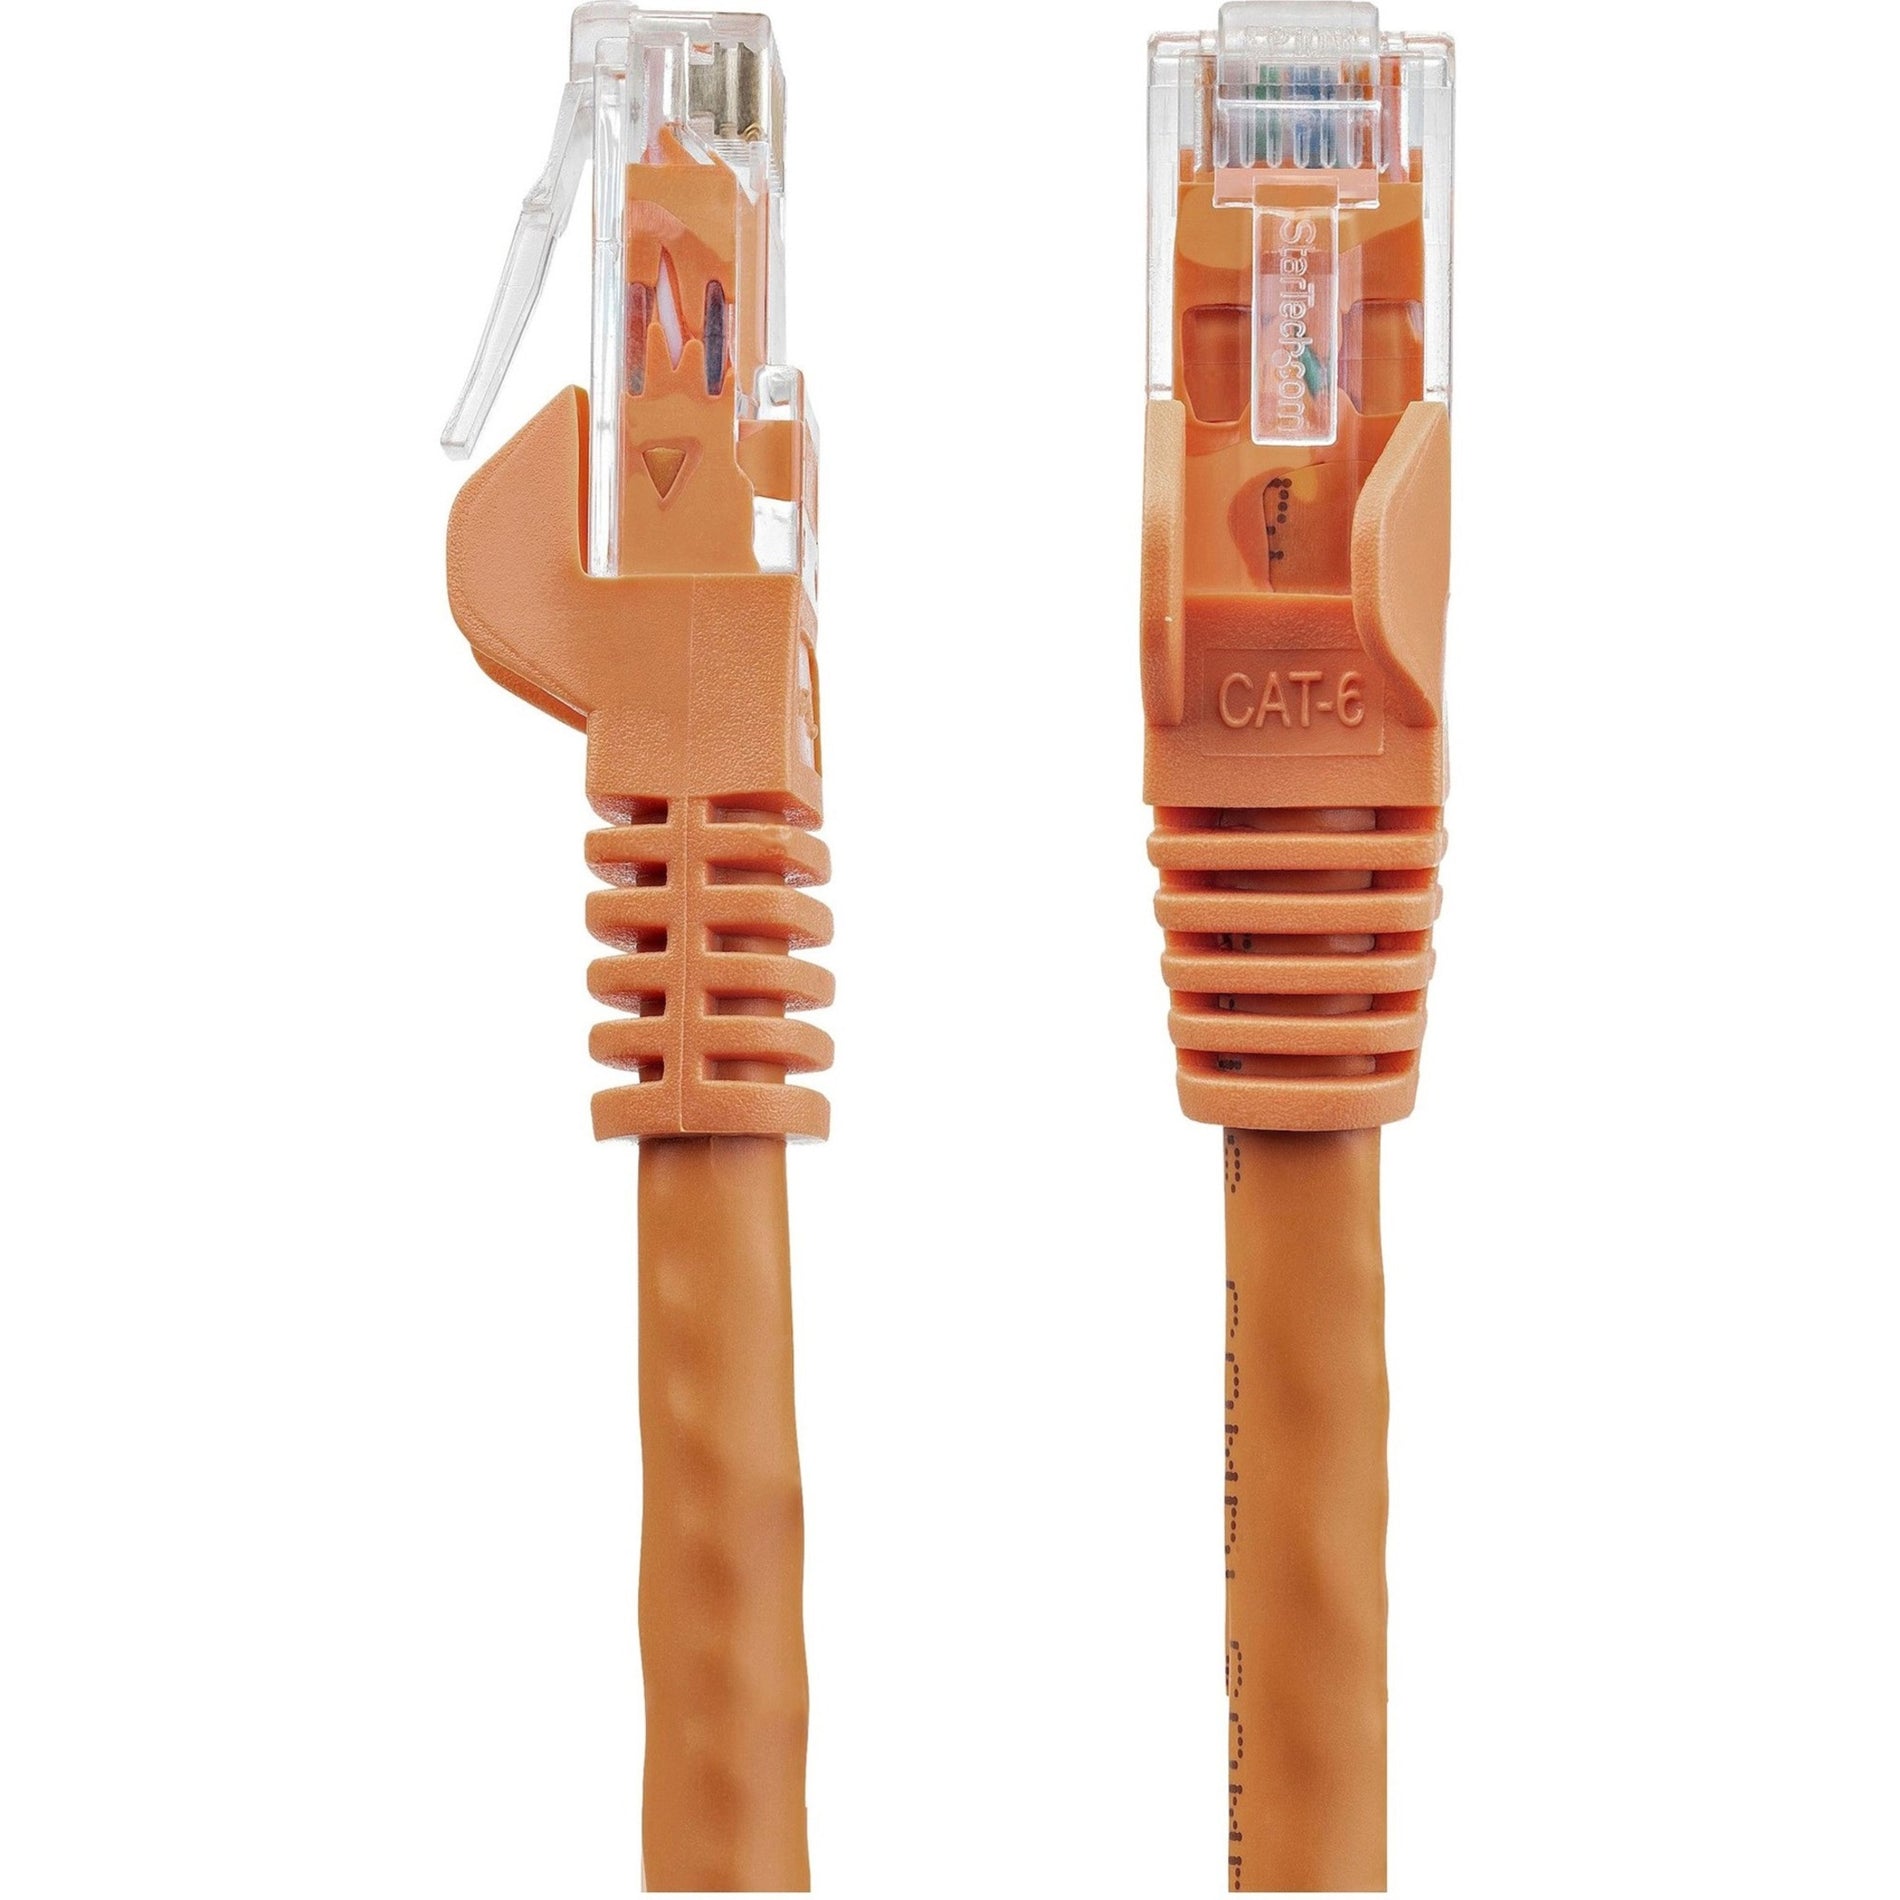 StarTech.com N6PATCH12OR Cat6 Patch Cable, 12ft Orange Ethernet Cable, Snagless RJ45 Connectors